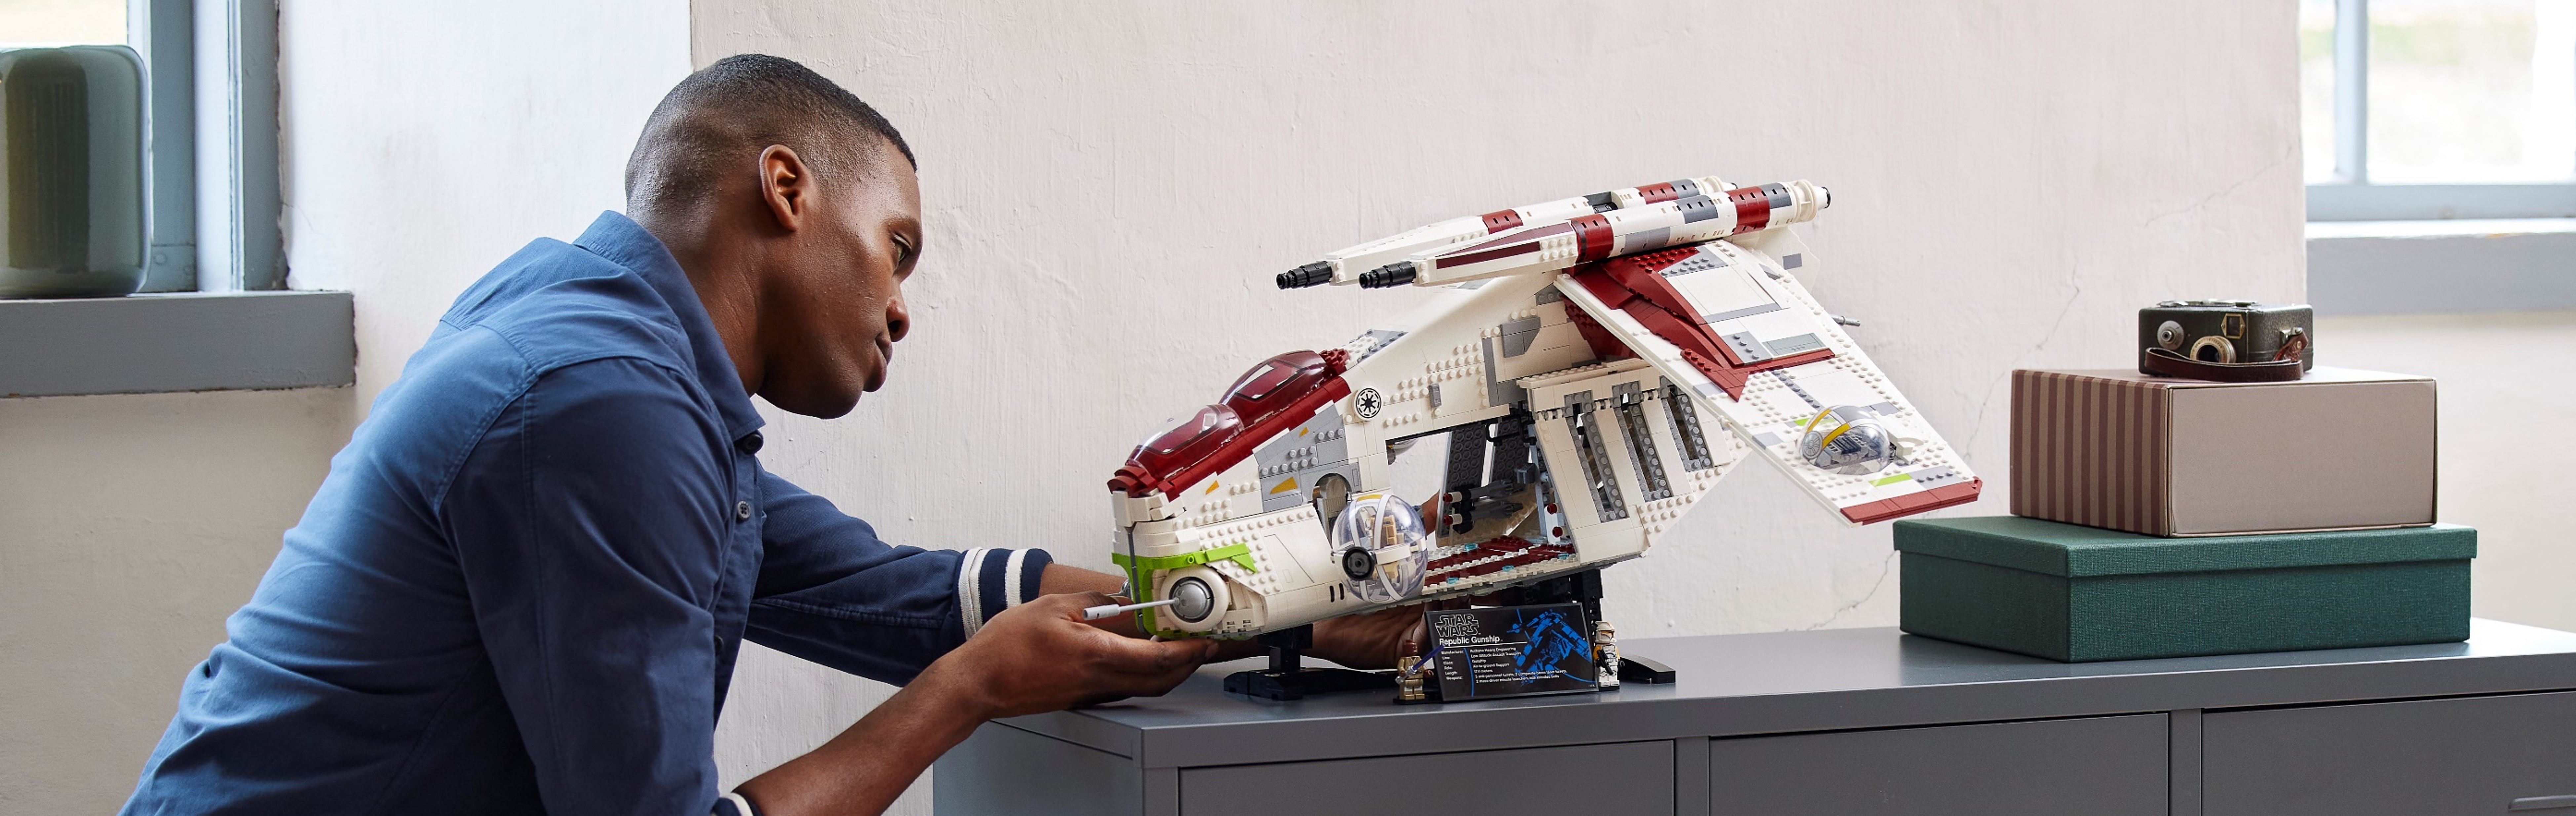 Star Wars The Mandalorian  Fit Lego Minifiguren Geschenk Spielzeuge Sammlungen 